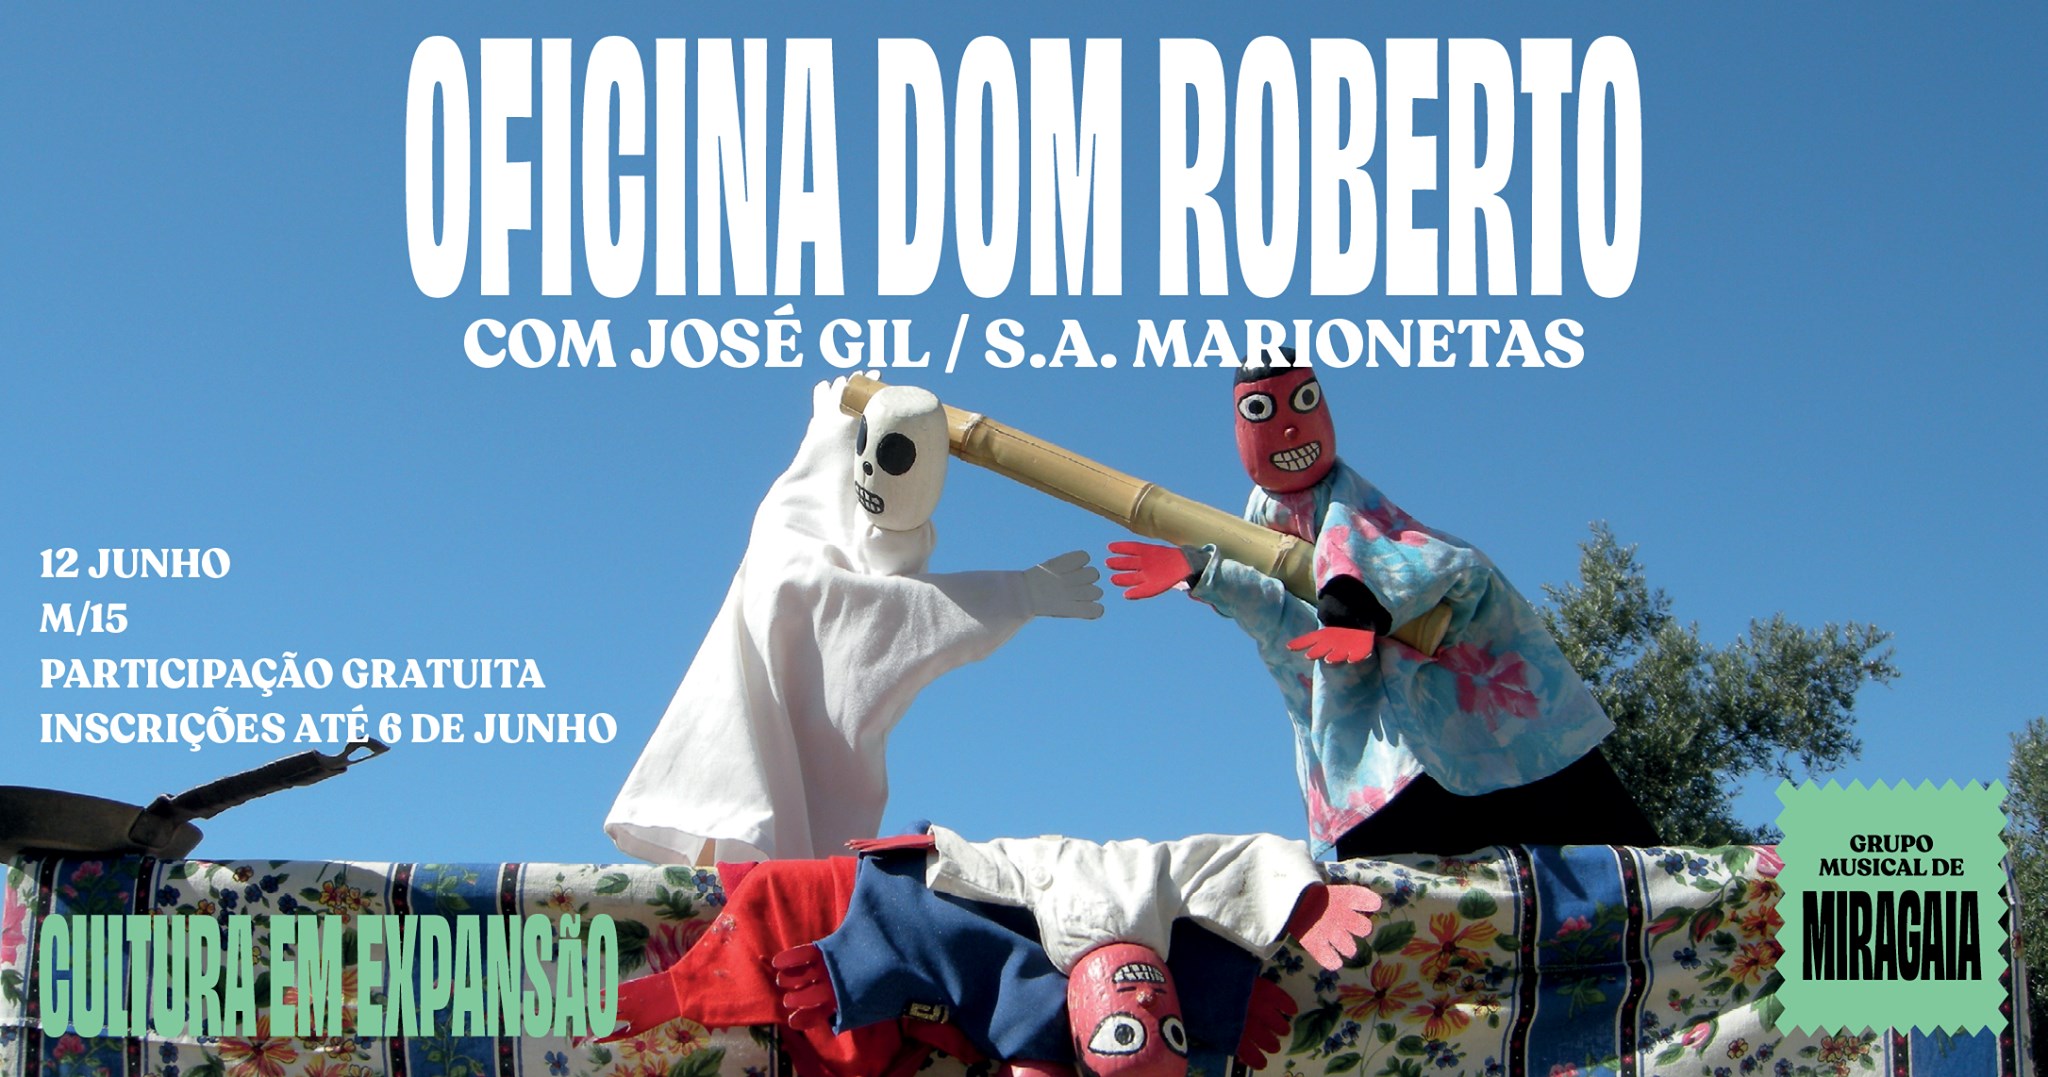 Oficina Dom Roberto com José Gil / S.A. Marionetas